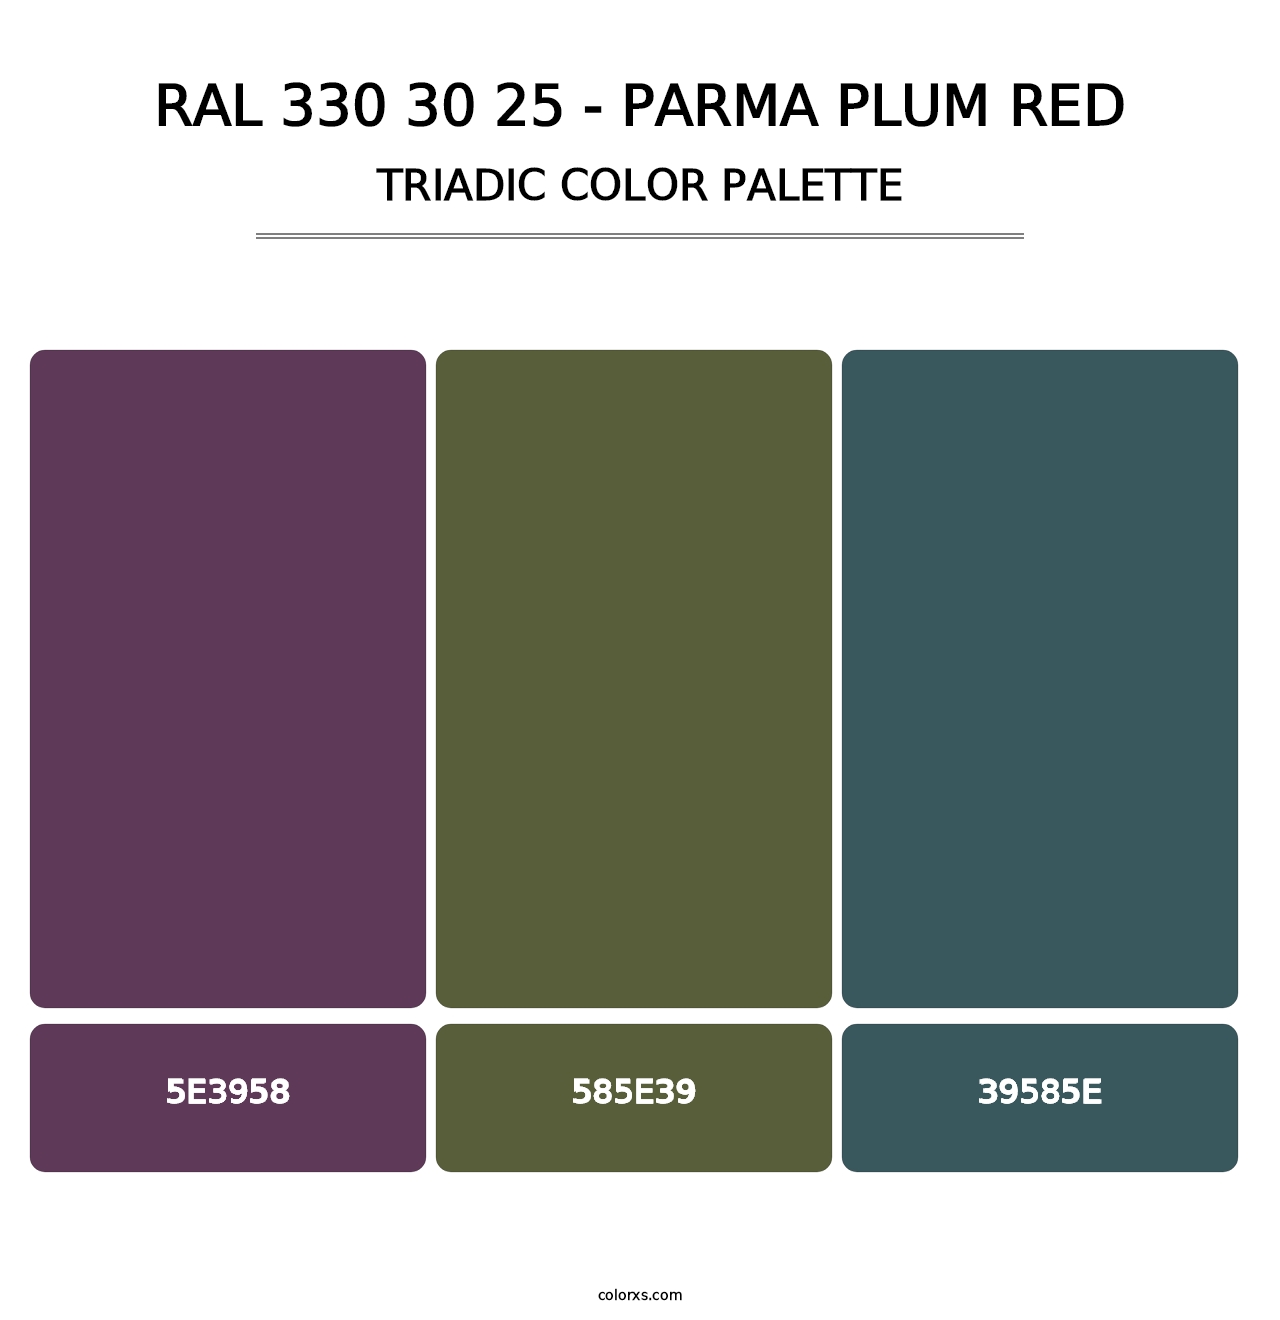 RAL 330 30 25 - Parma Plum Red - Triadic Color Palette